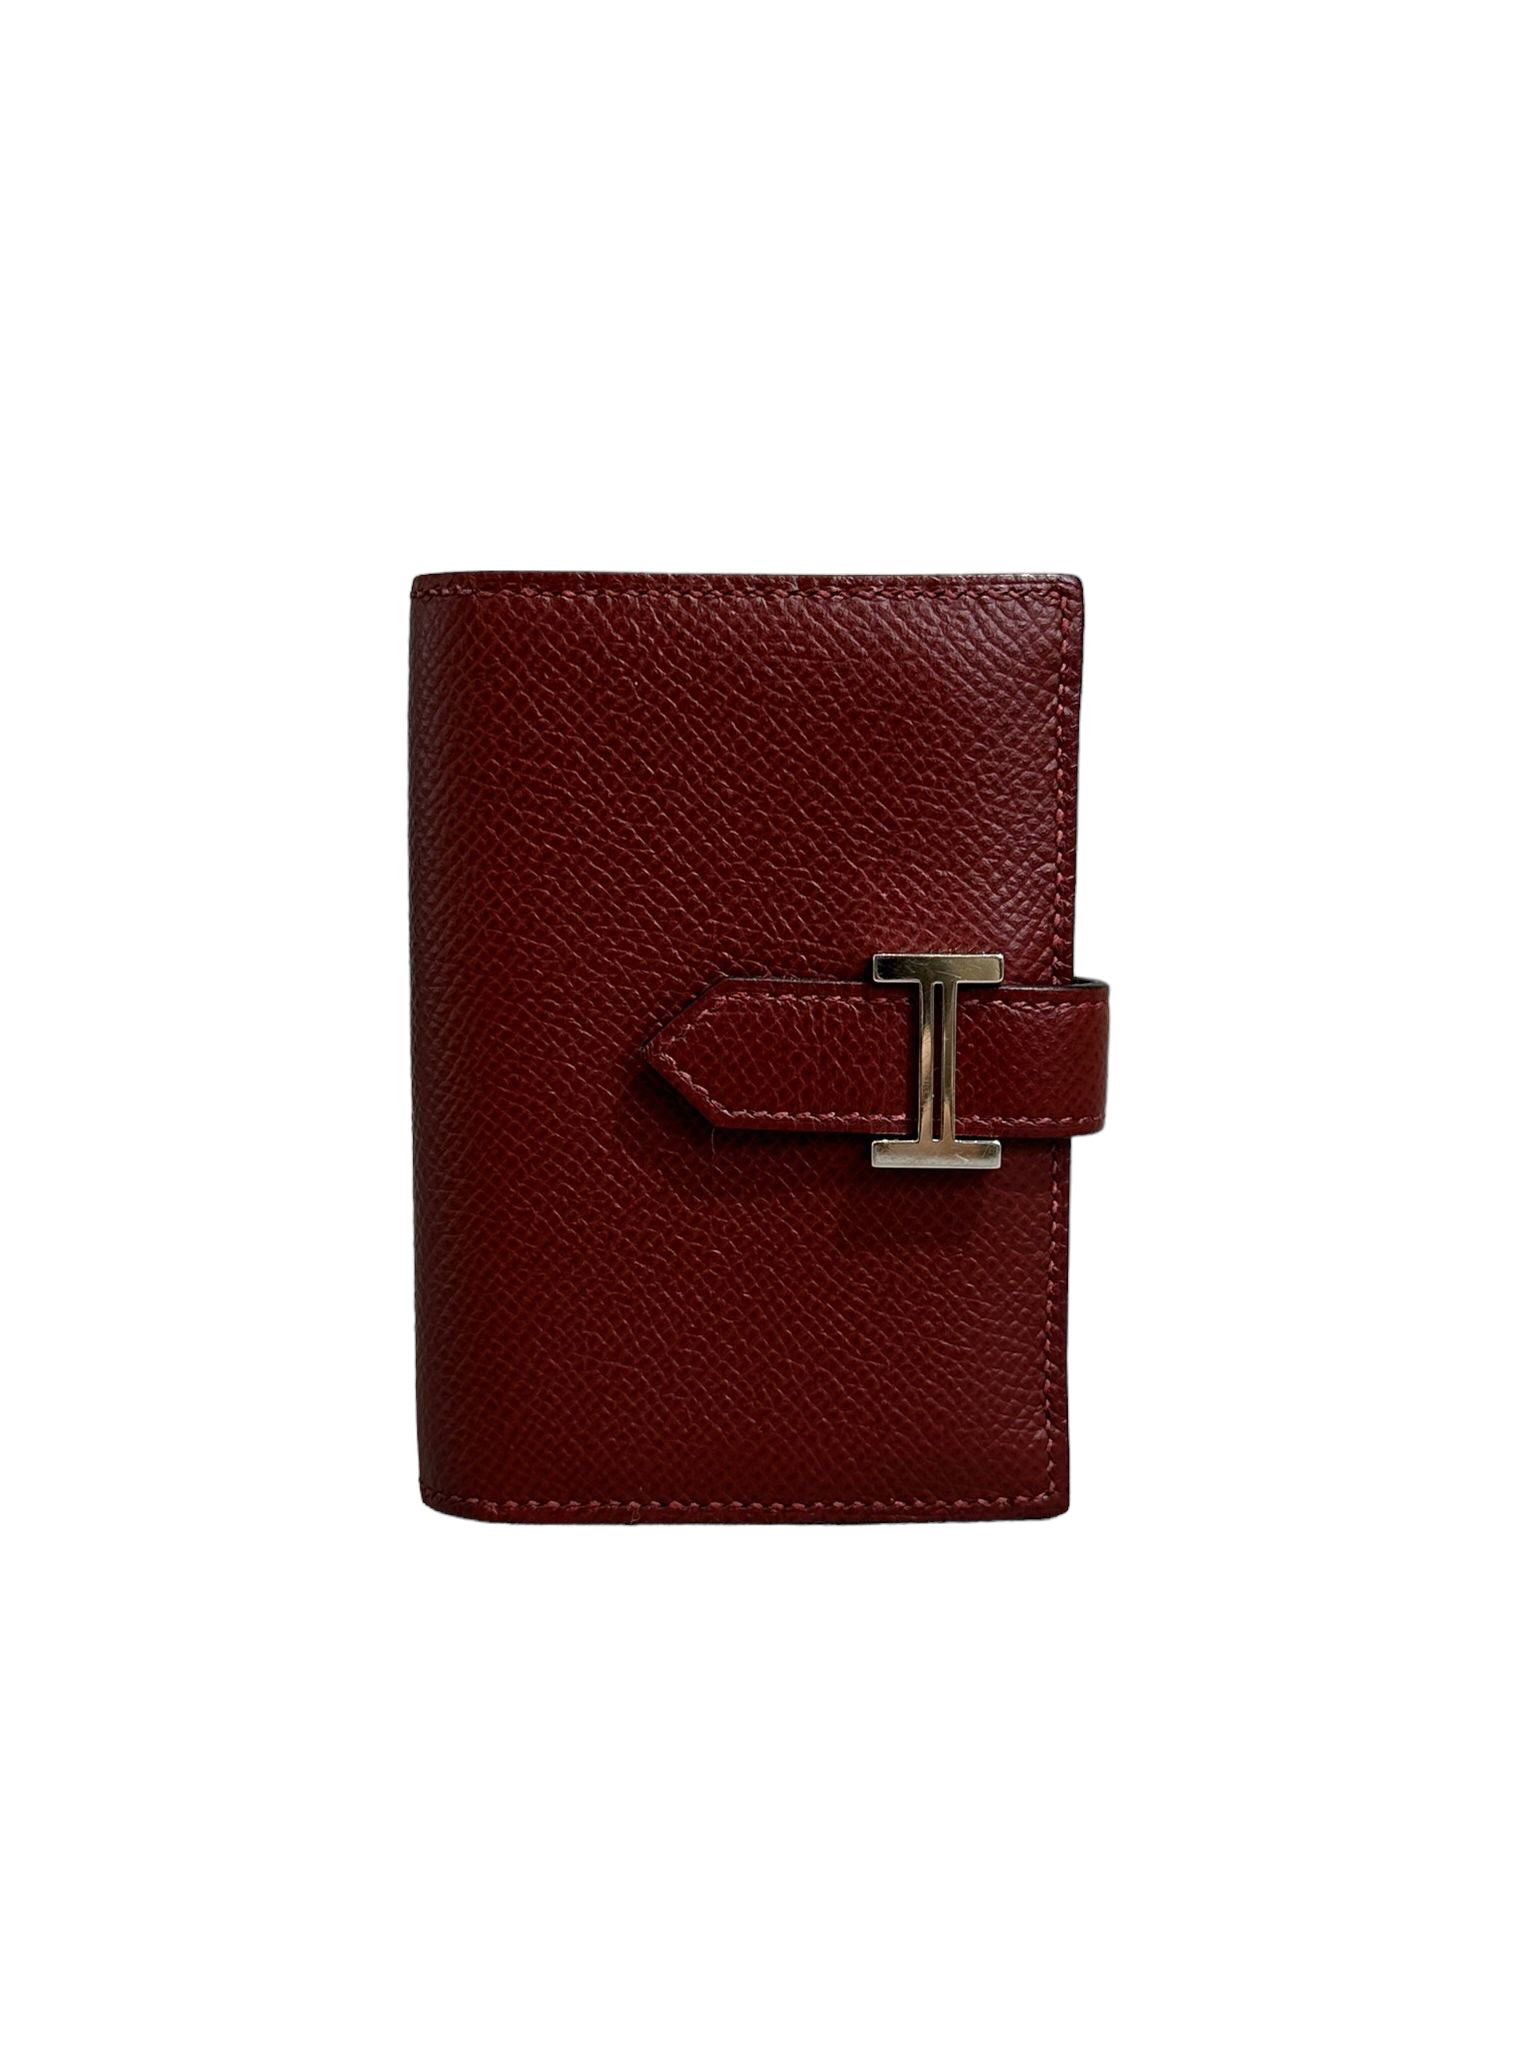 GX Hermes Bearn Mini wallet